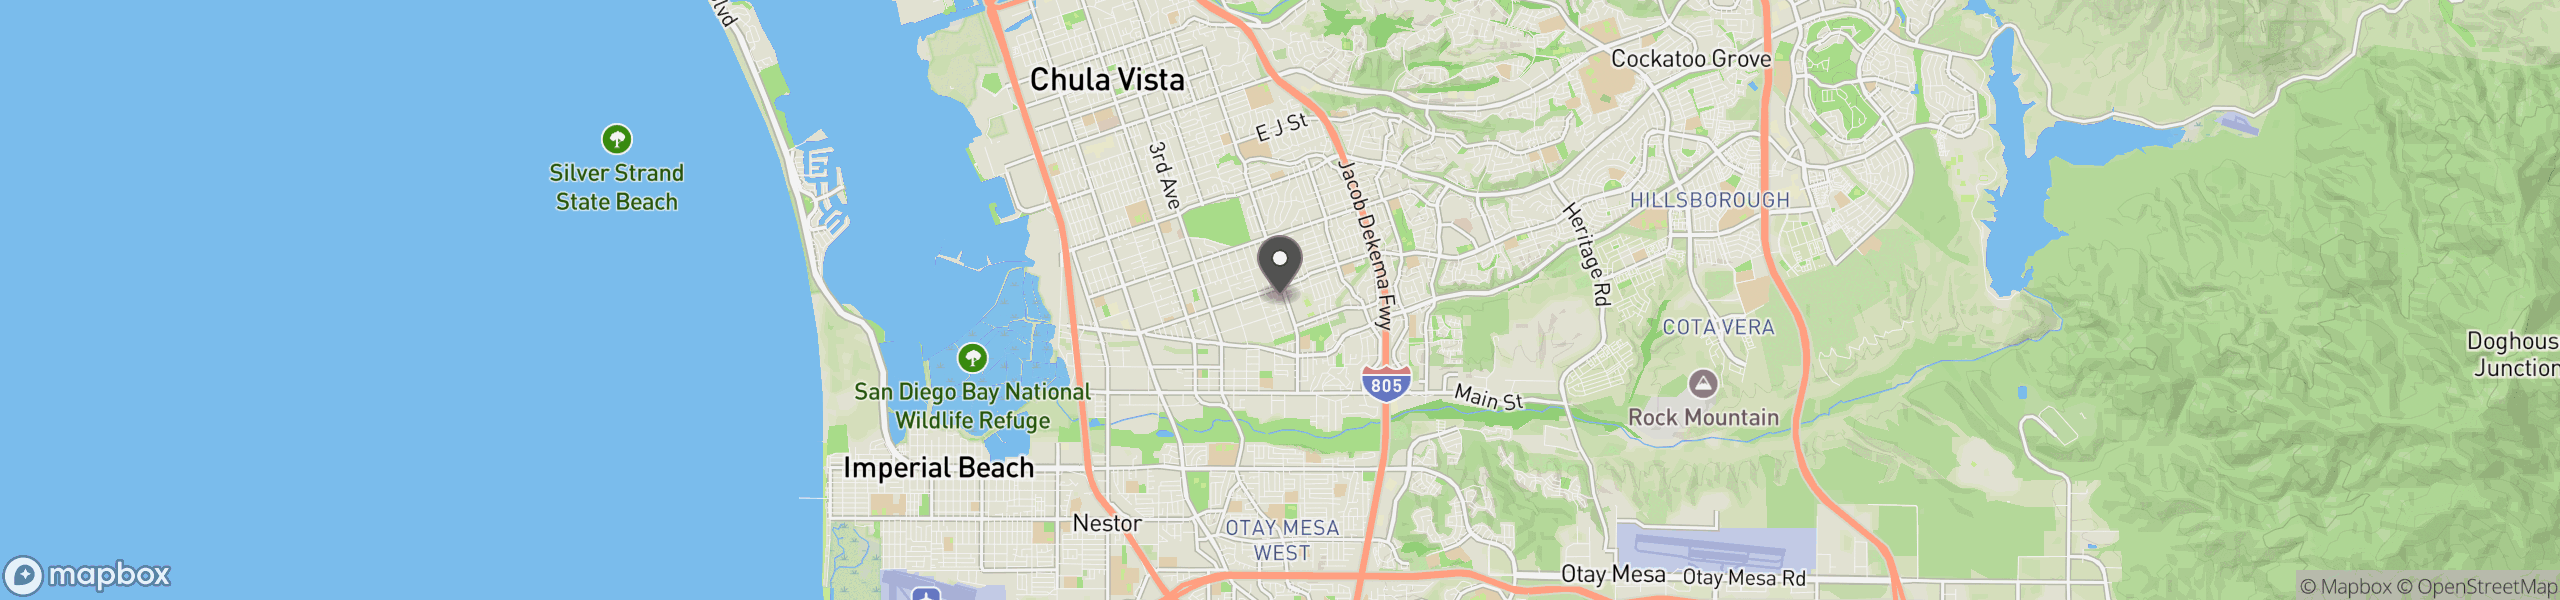 Chula Vista, CA 91911